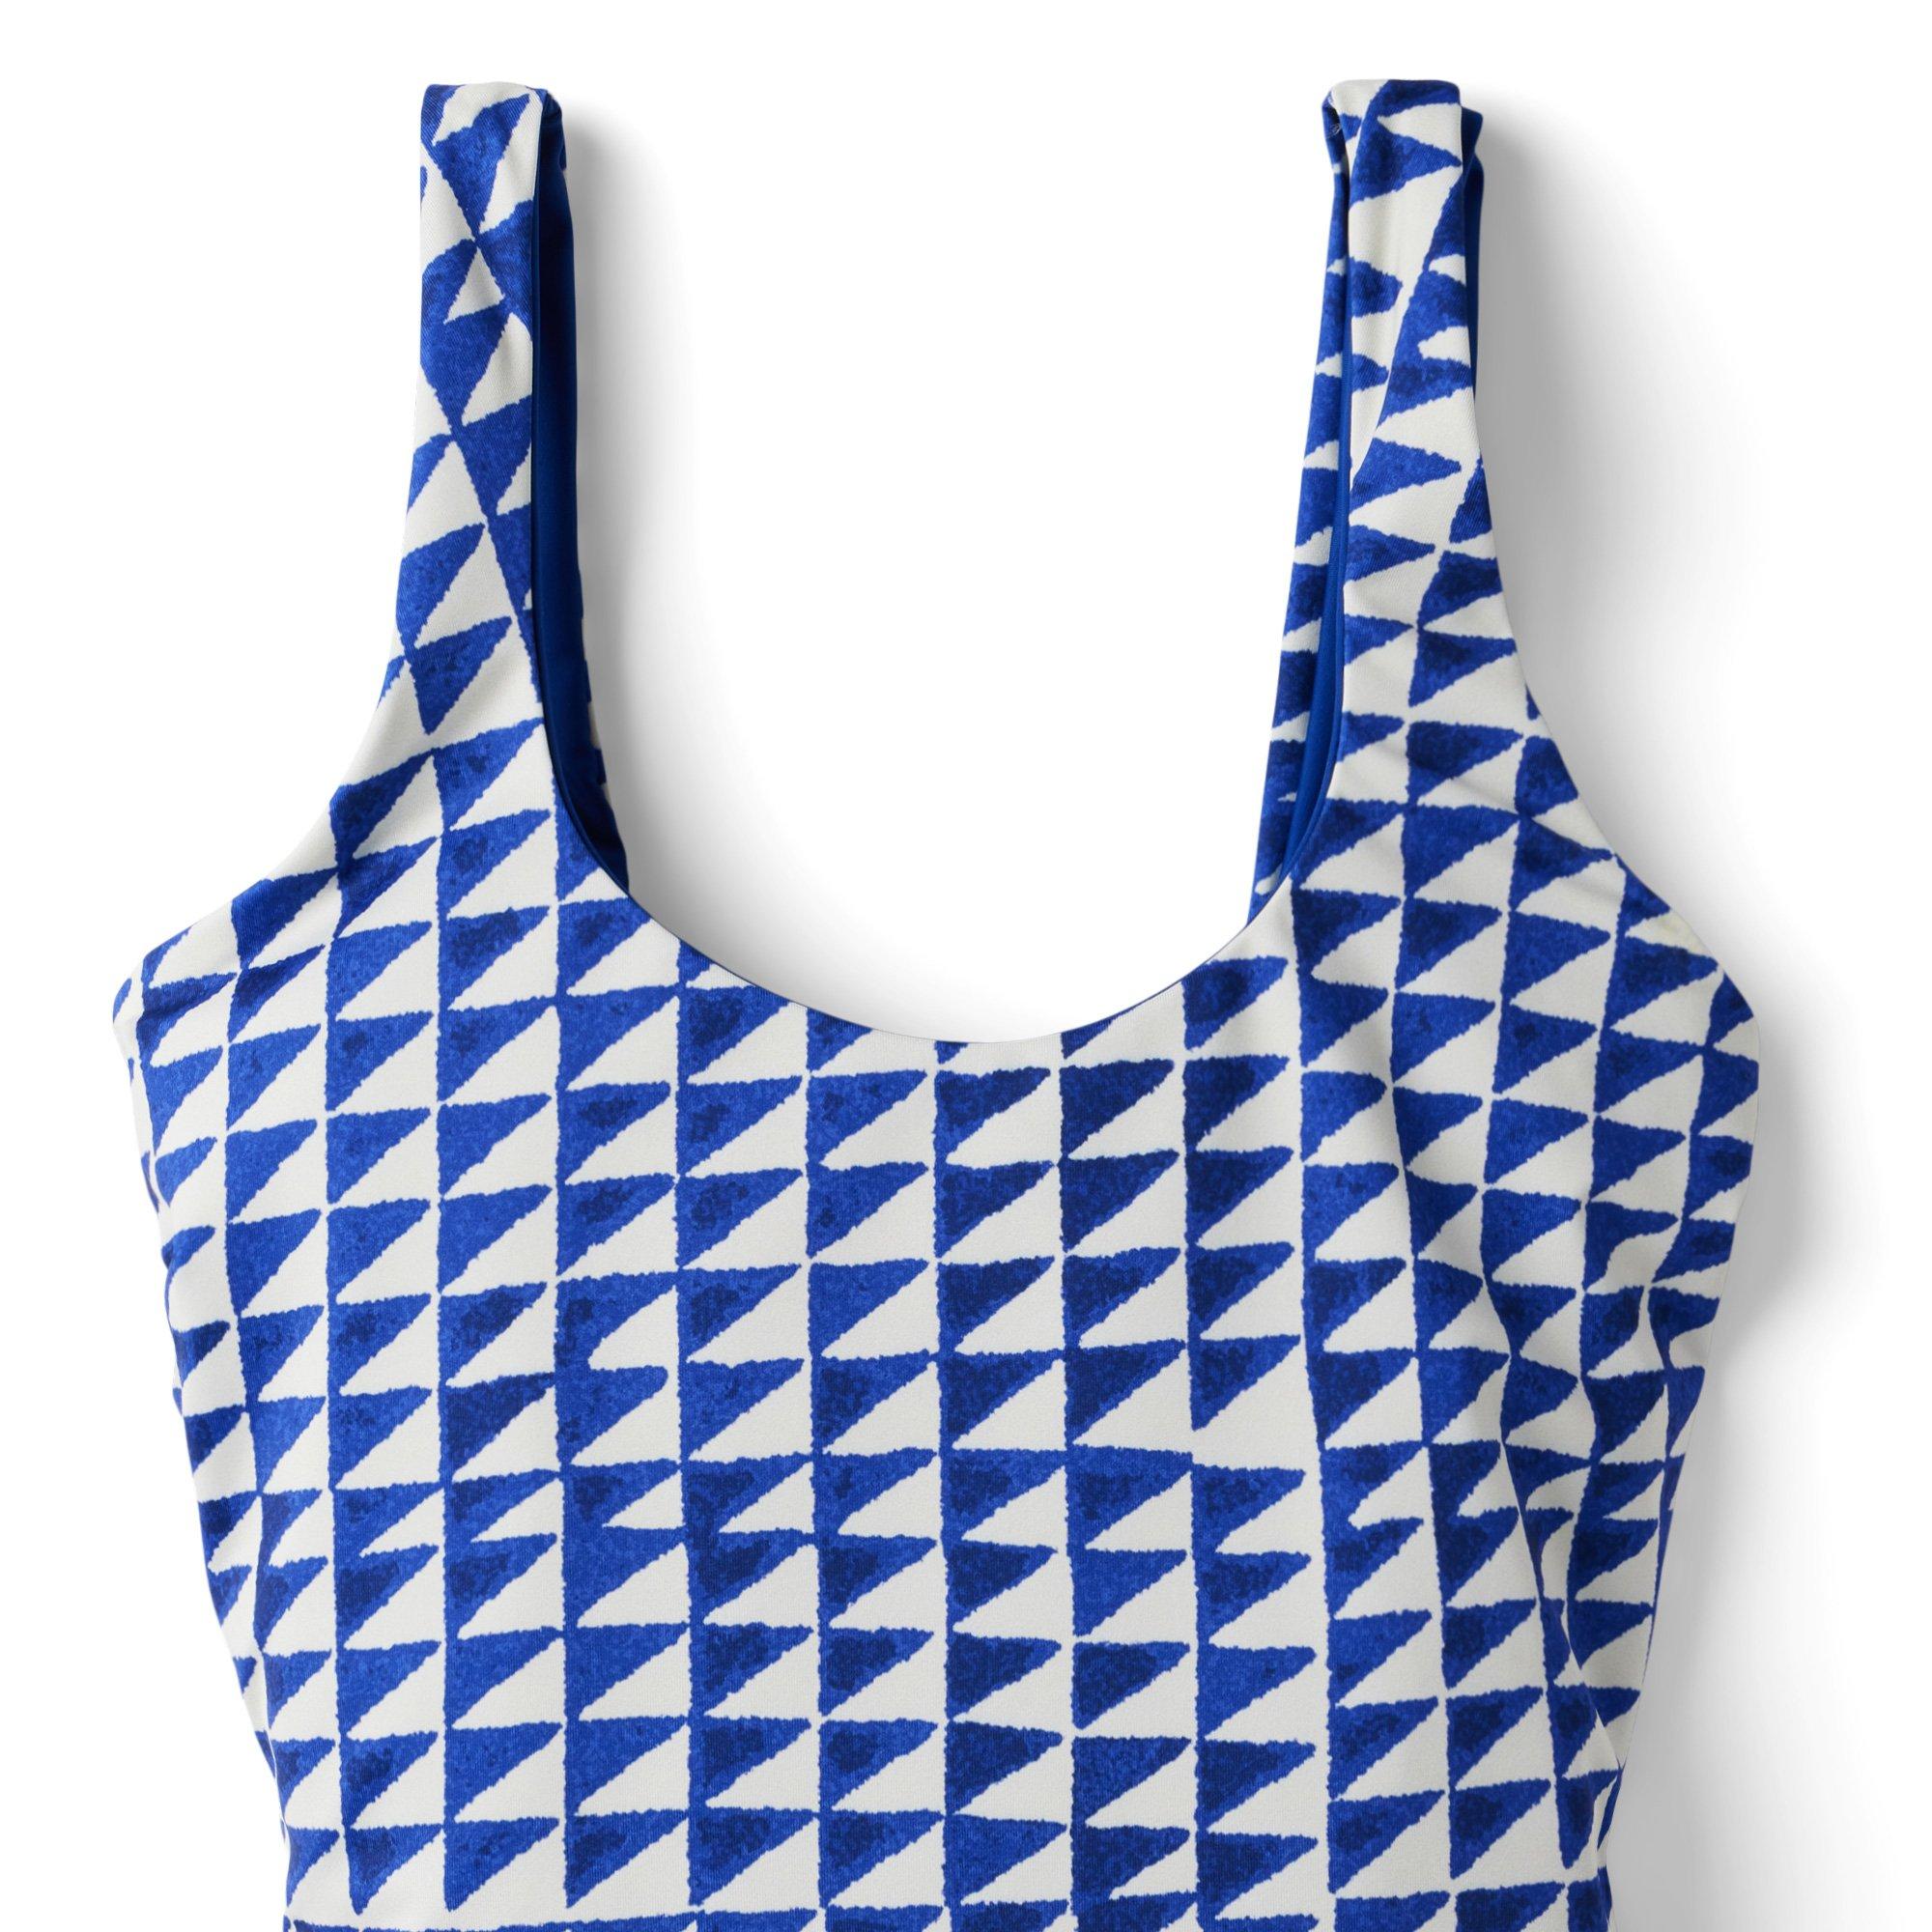 Dawne Florine Women's Reversible Tile Print Swimsuit image number 4